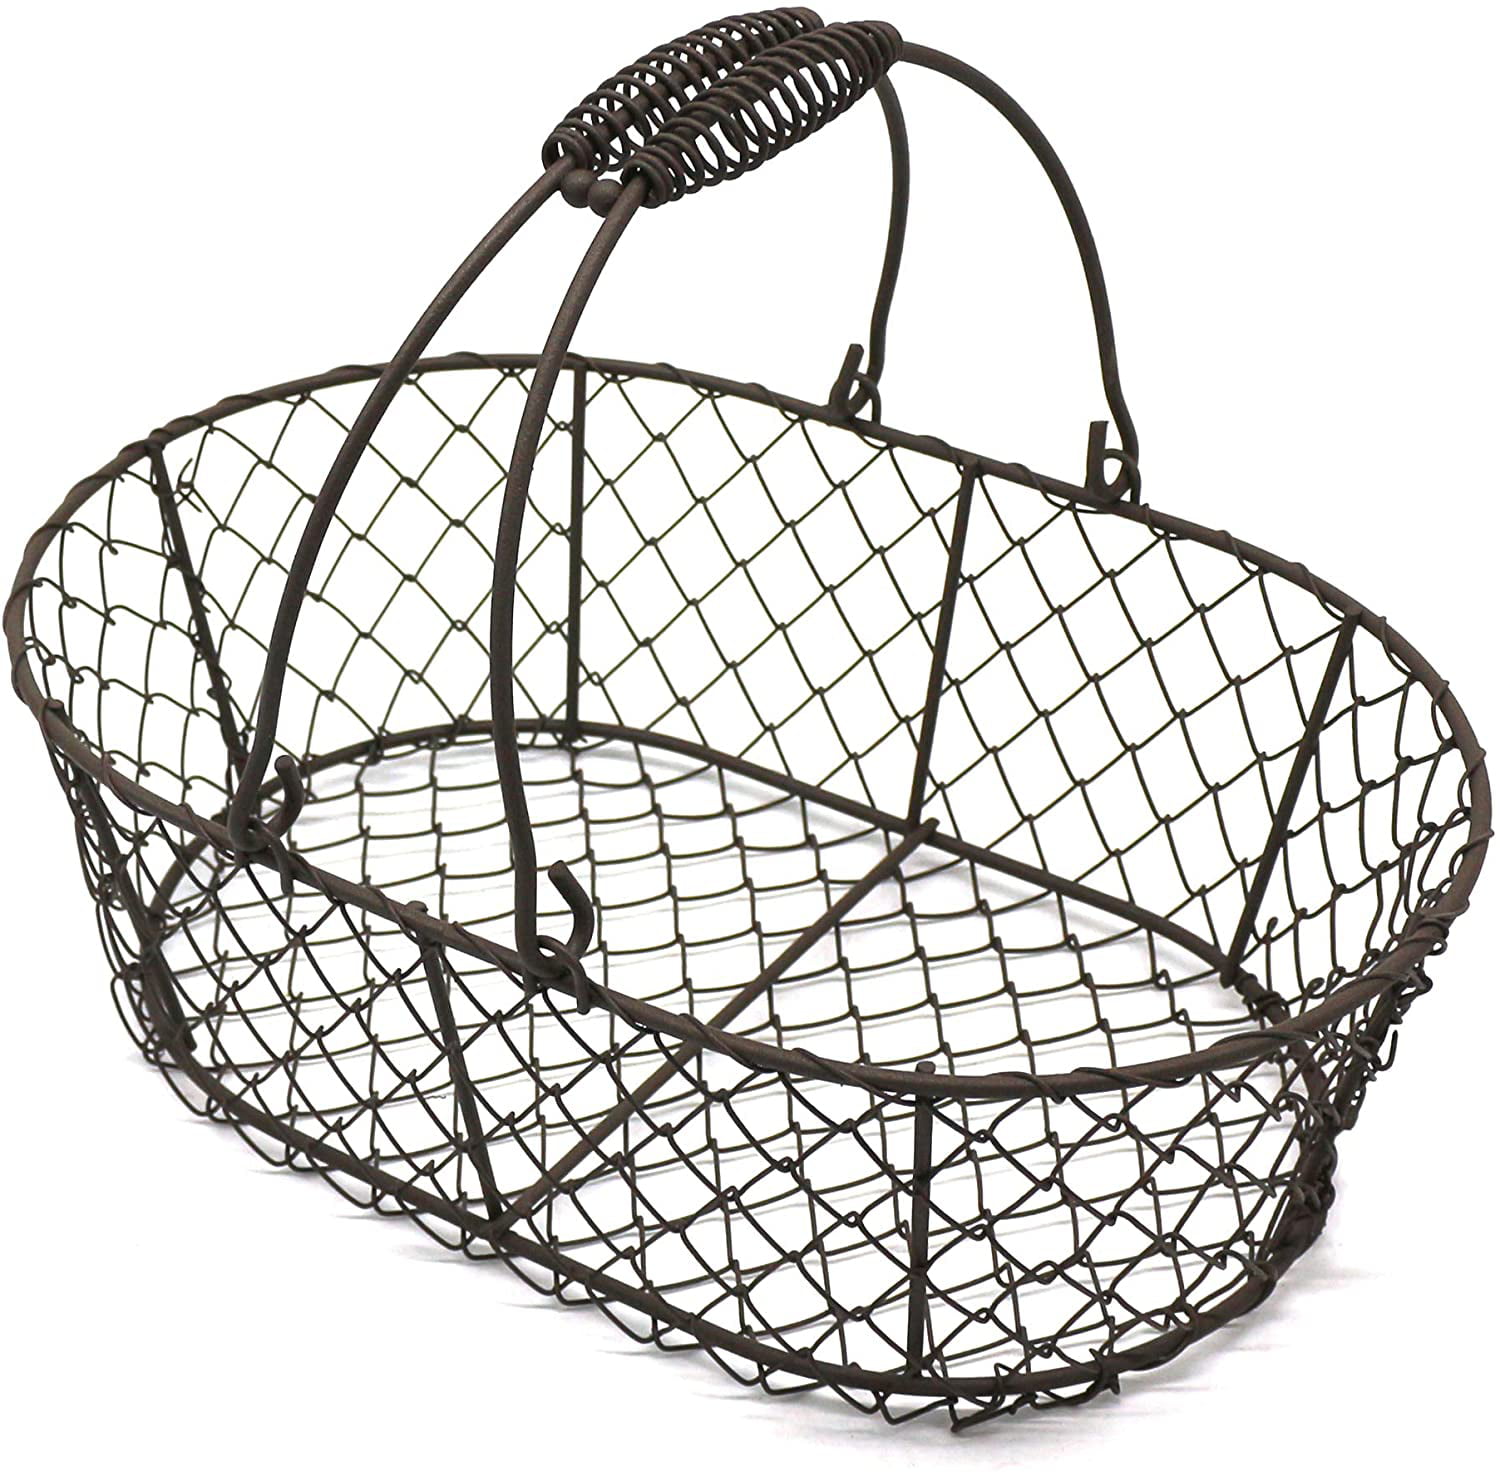 Vintage Rustic Black Metal Wire Oval Fruit Egg Storage Bread Display Baskets 